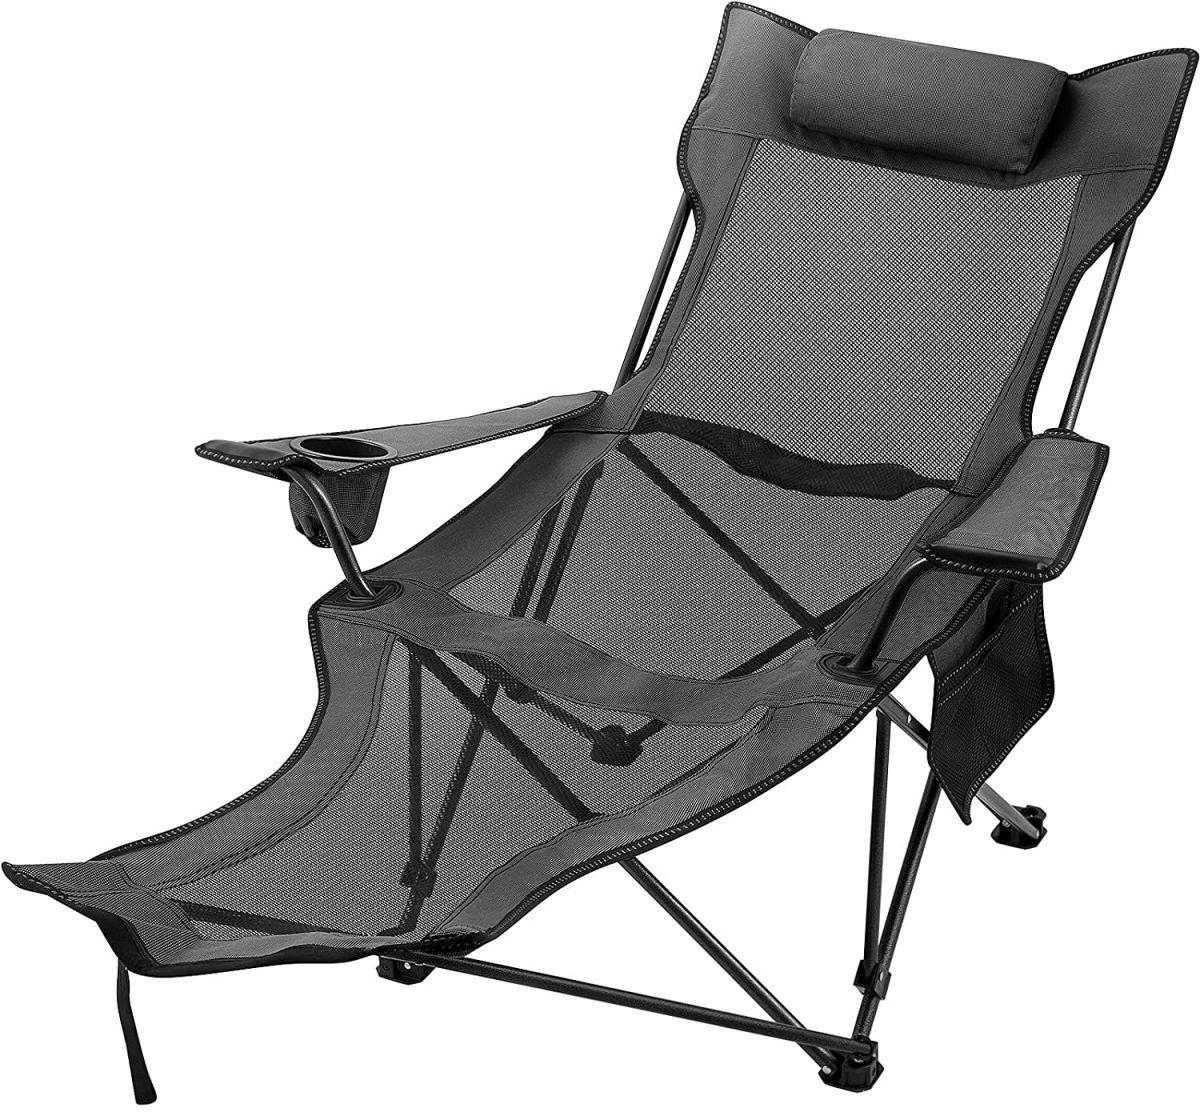 Happybuy Folding Camp Chair